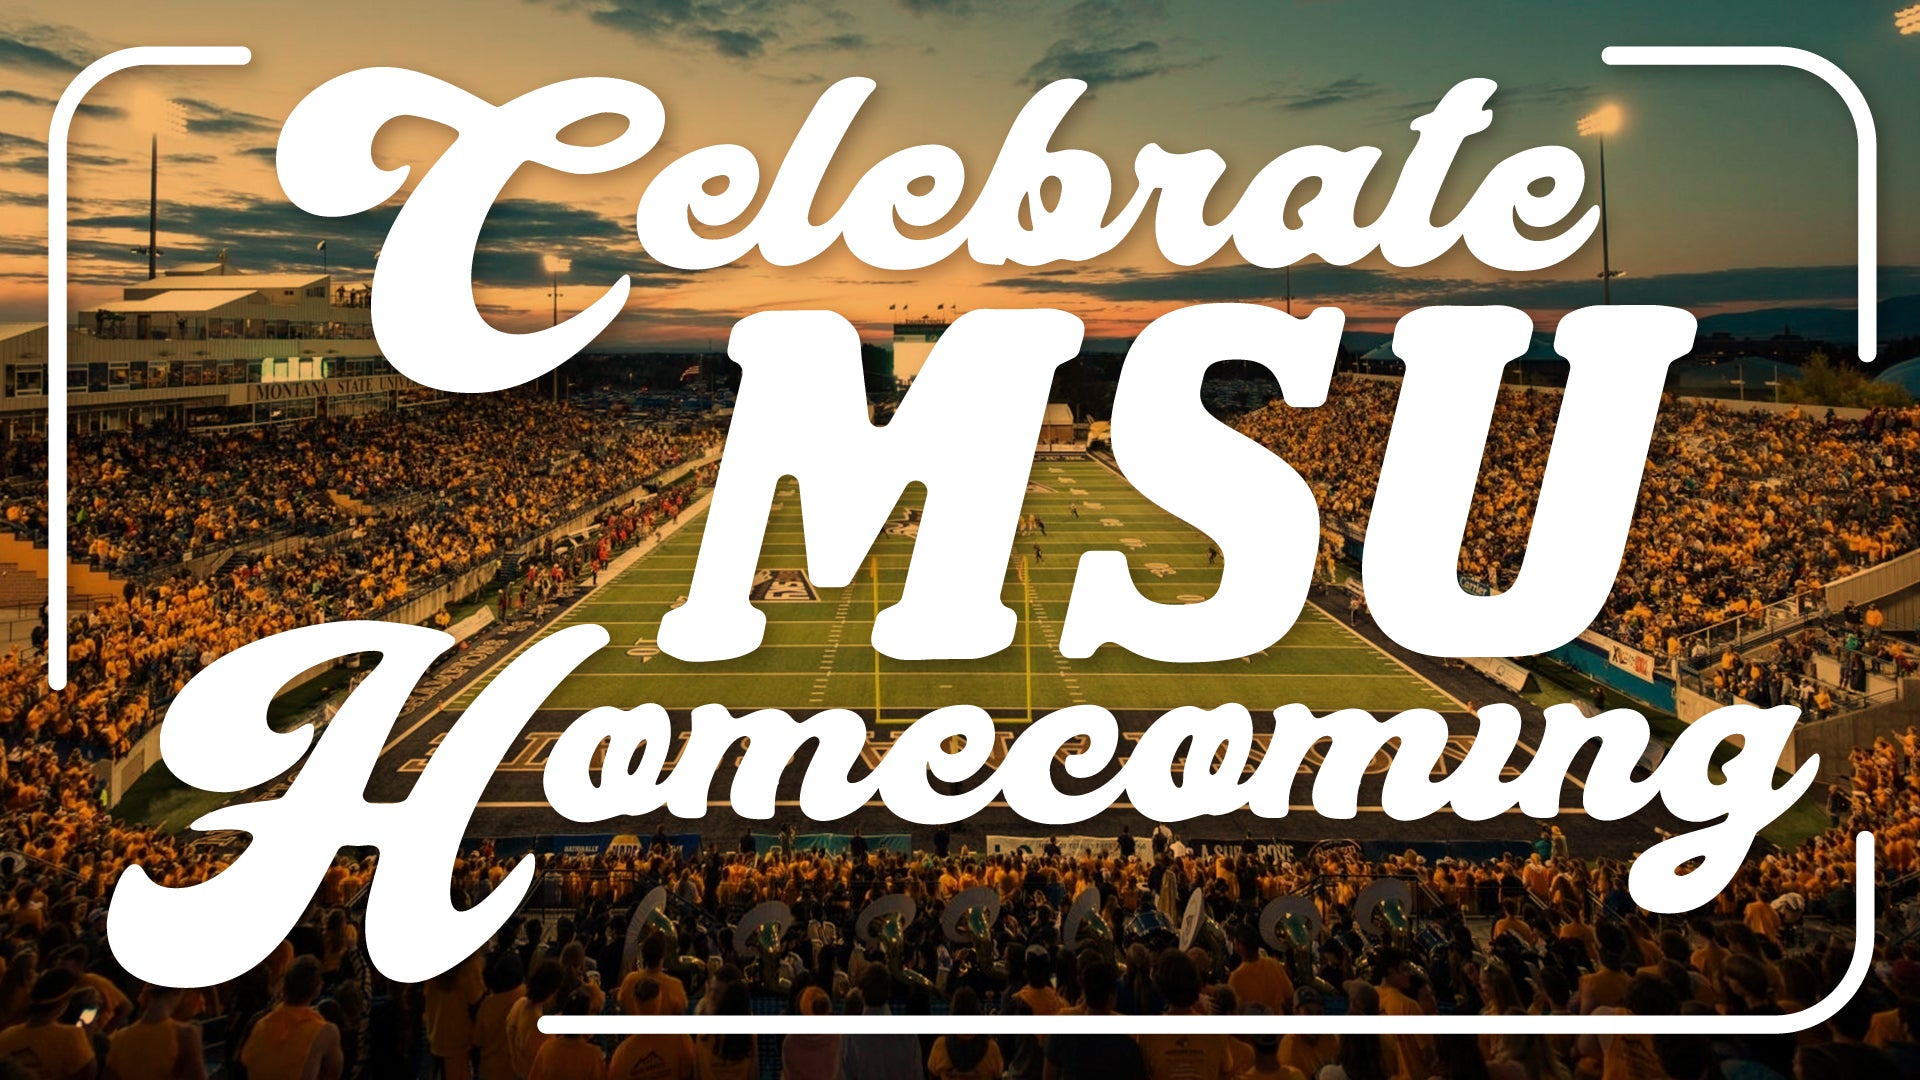 Celebrate Montana State University Homecoming!